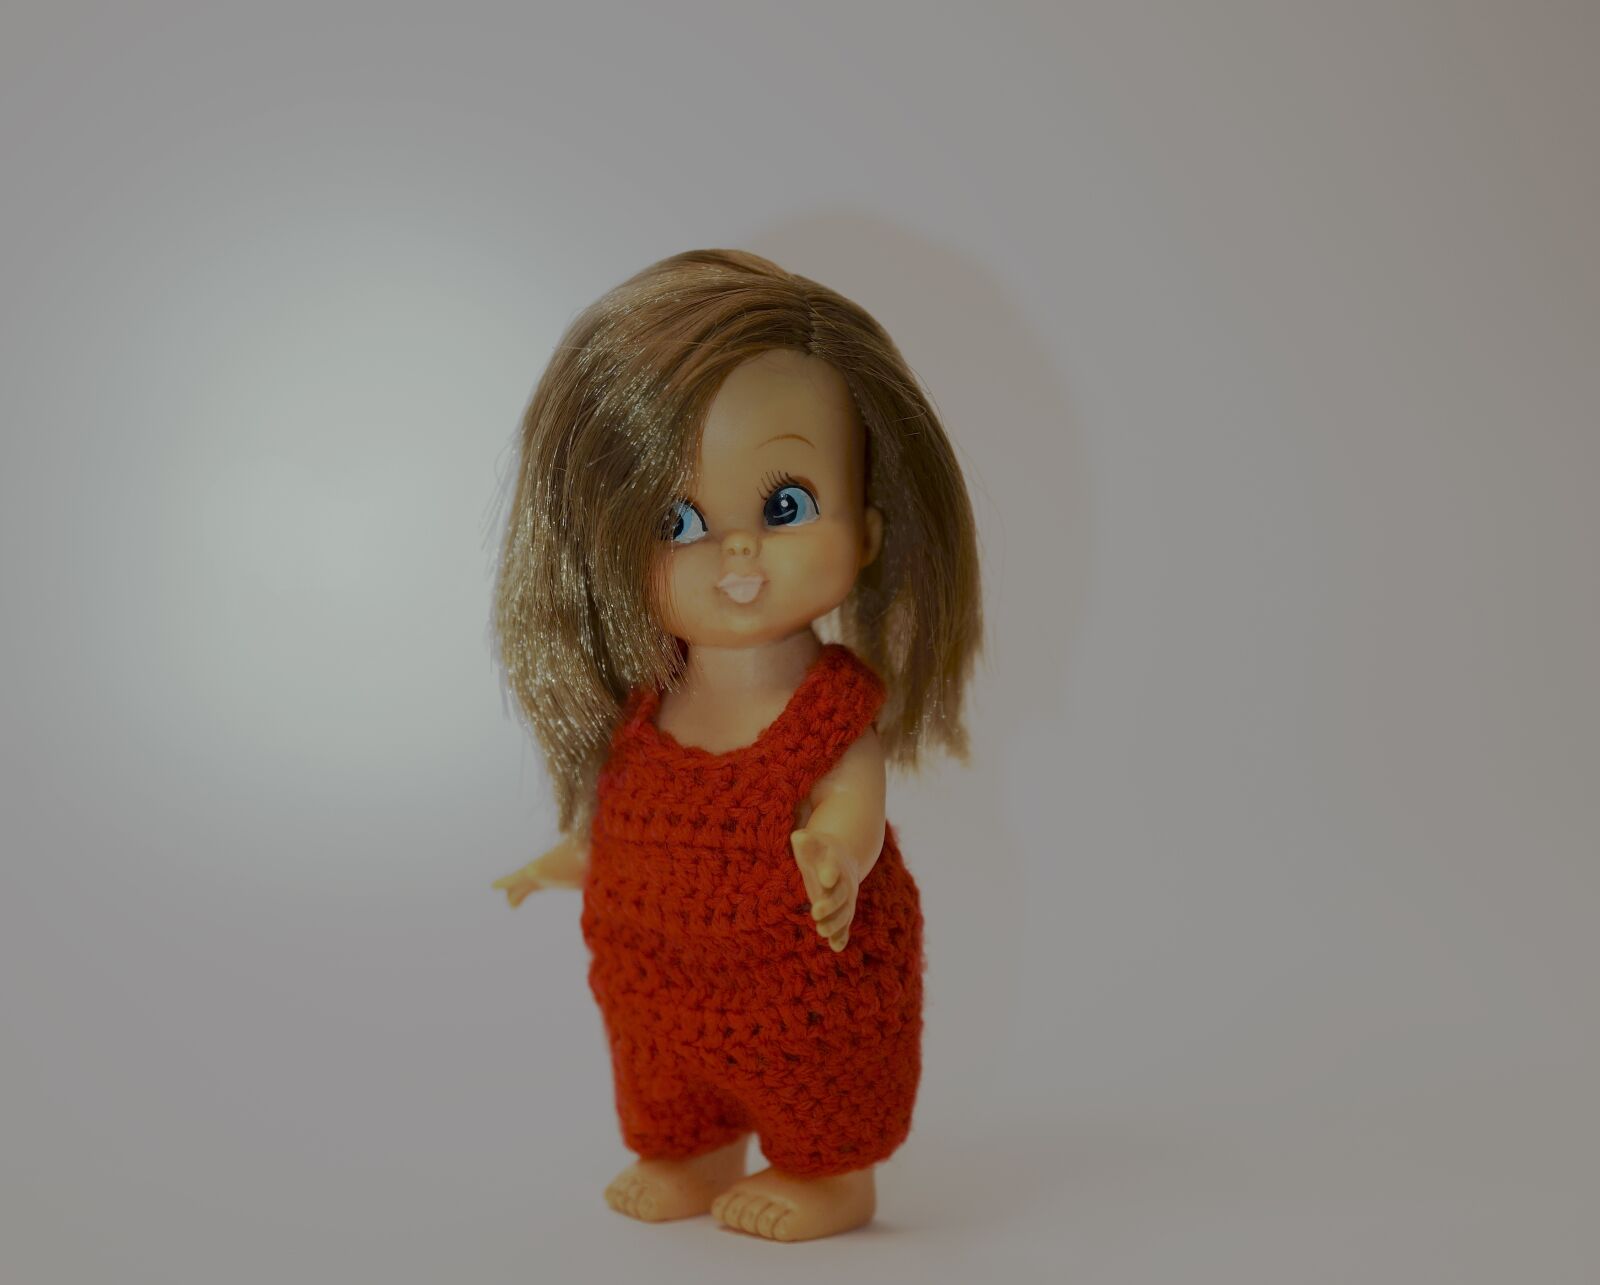 Sony a7 sample photo. Doll, flea market, toys photography